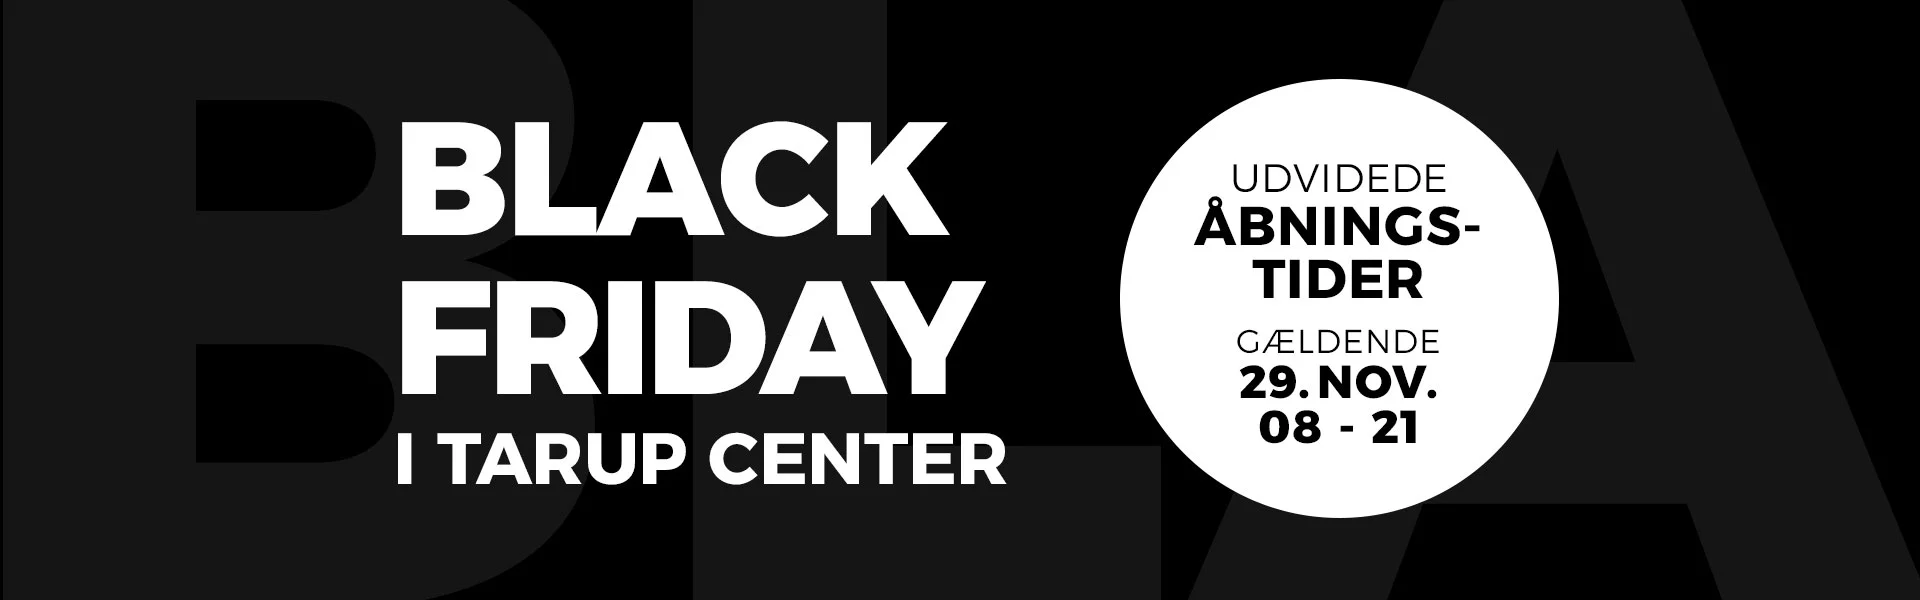 Kom til black friday i Tarup Center fredag den 29. november 2019